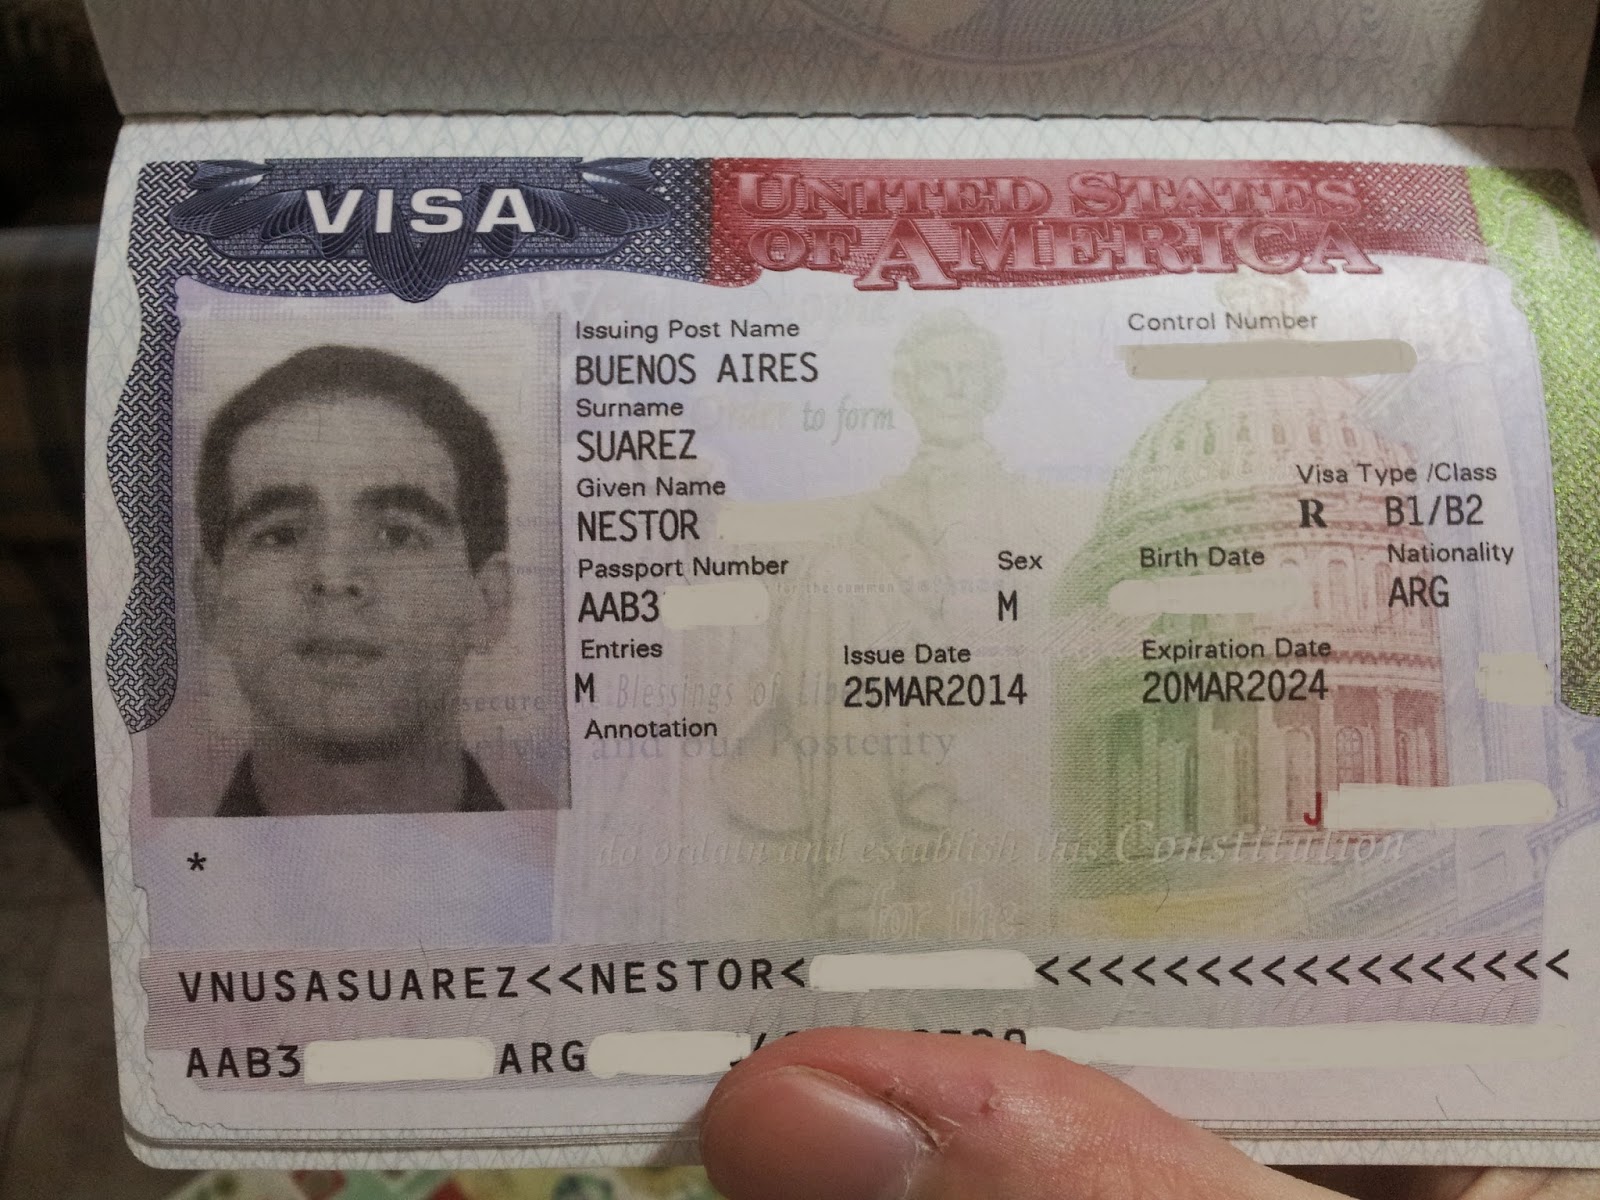 Visa Americana. Рабочая виза в США. USA b1 b2 visa. USA visa Types class. Visa type